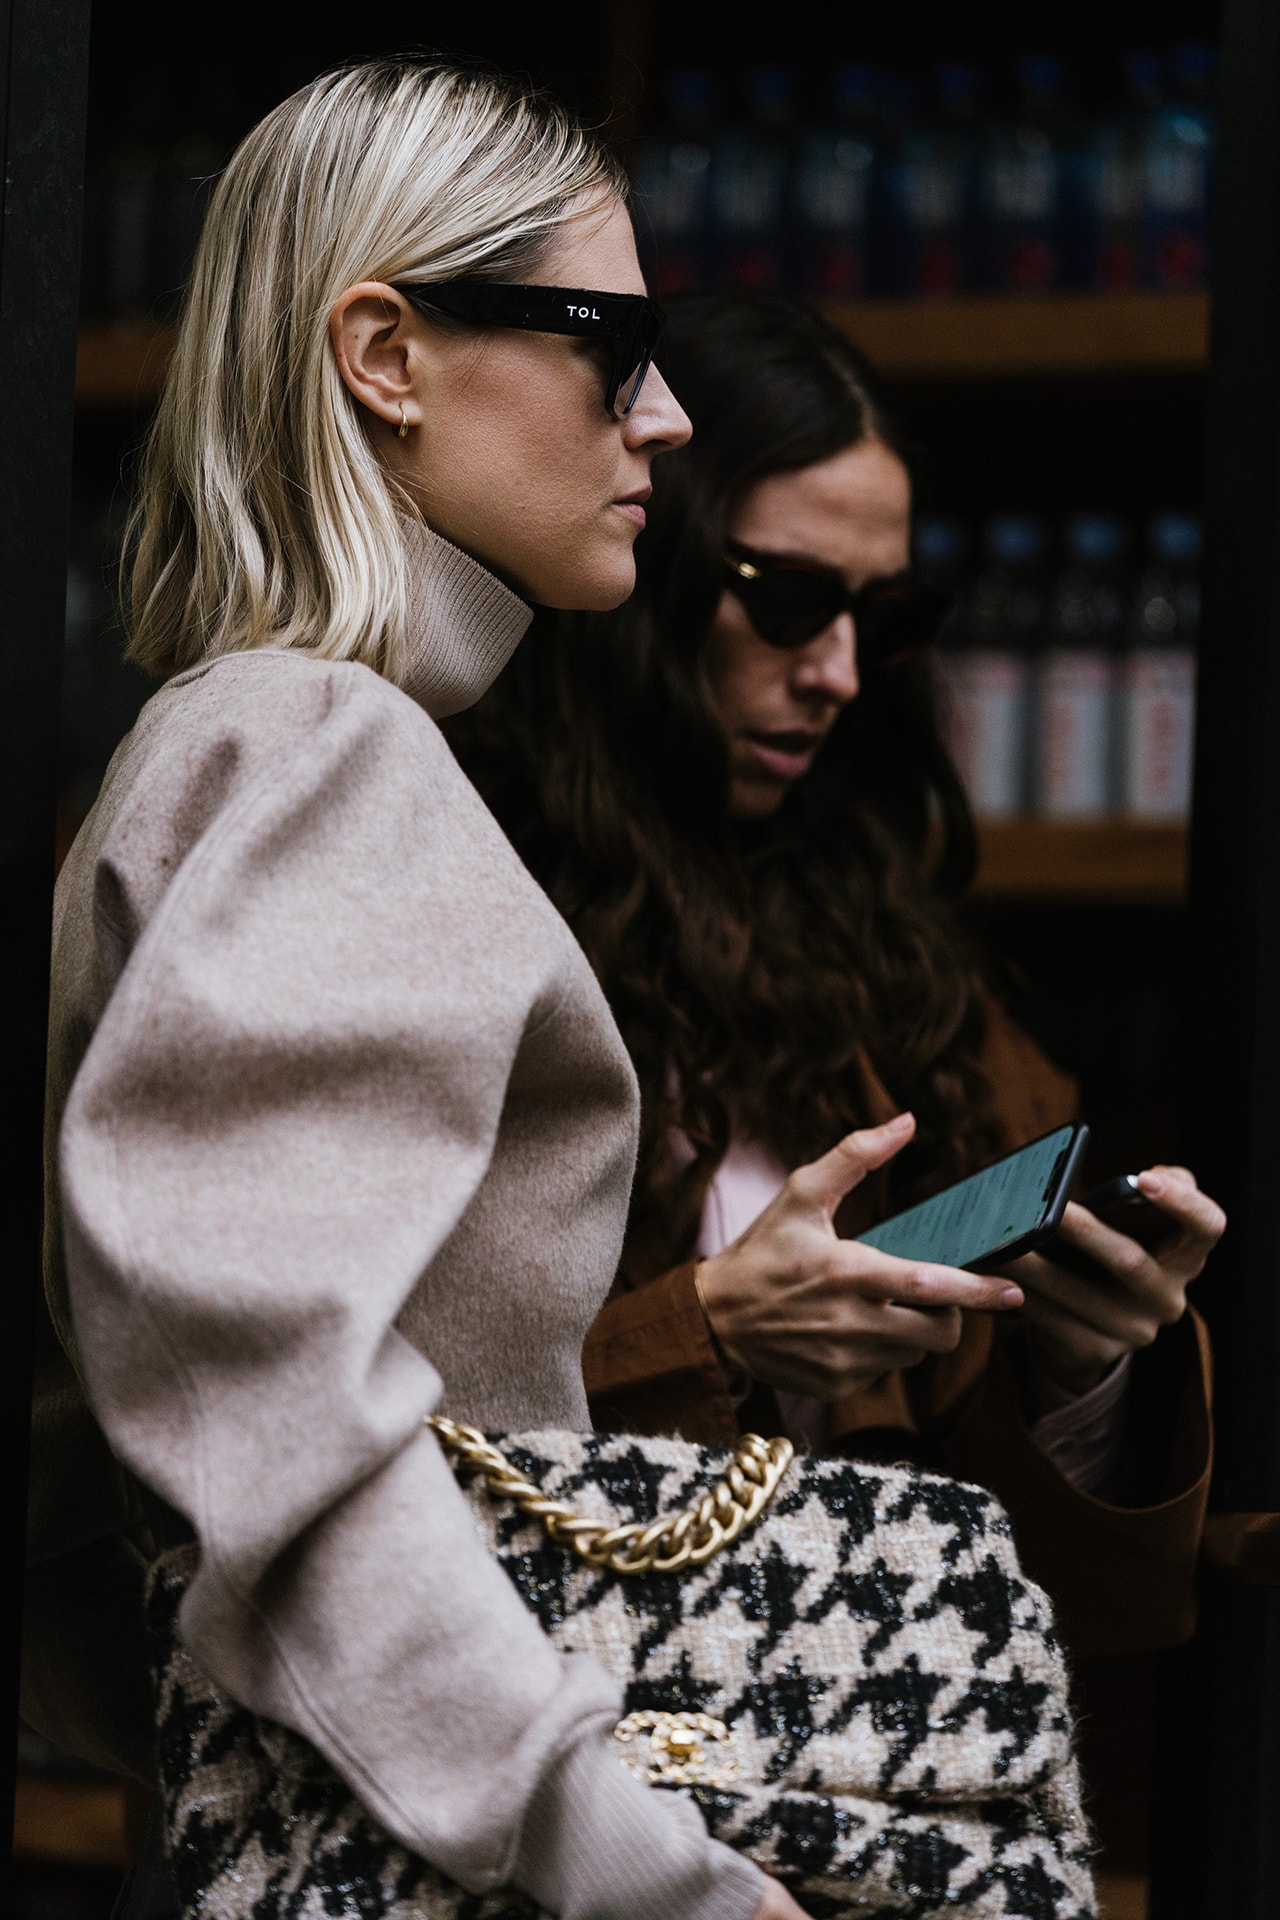 New York Fashion Week FW20 NYFW Fall Winter 2020 Street Style Influencers Sunglasses Chanel Tweed Bag